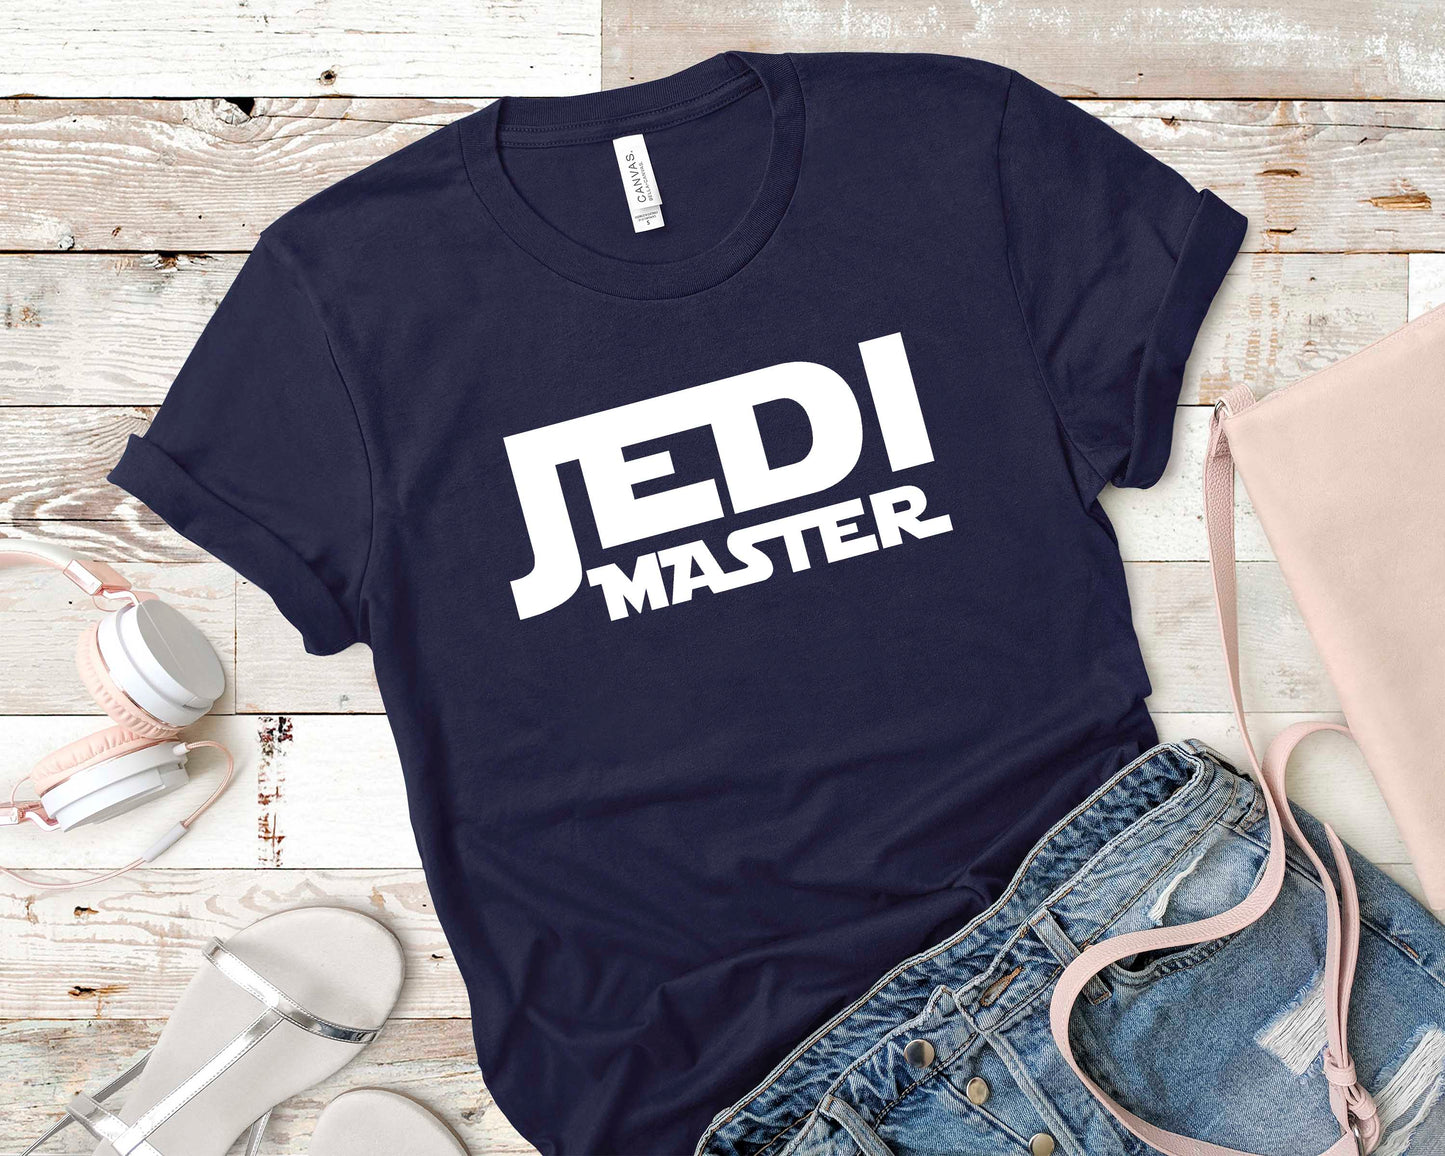 Jedi Master - Star Wars